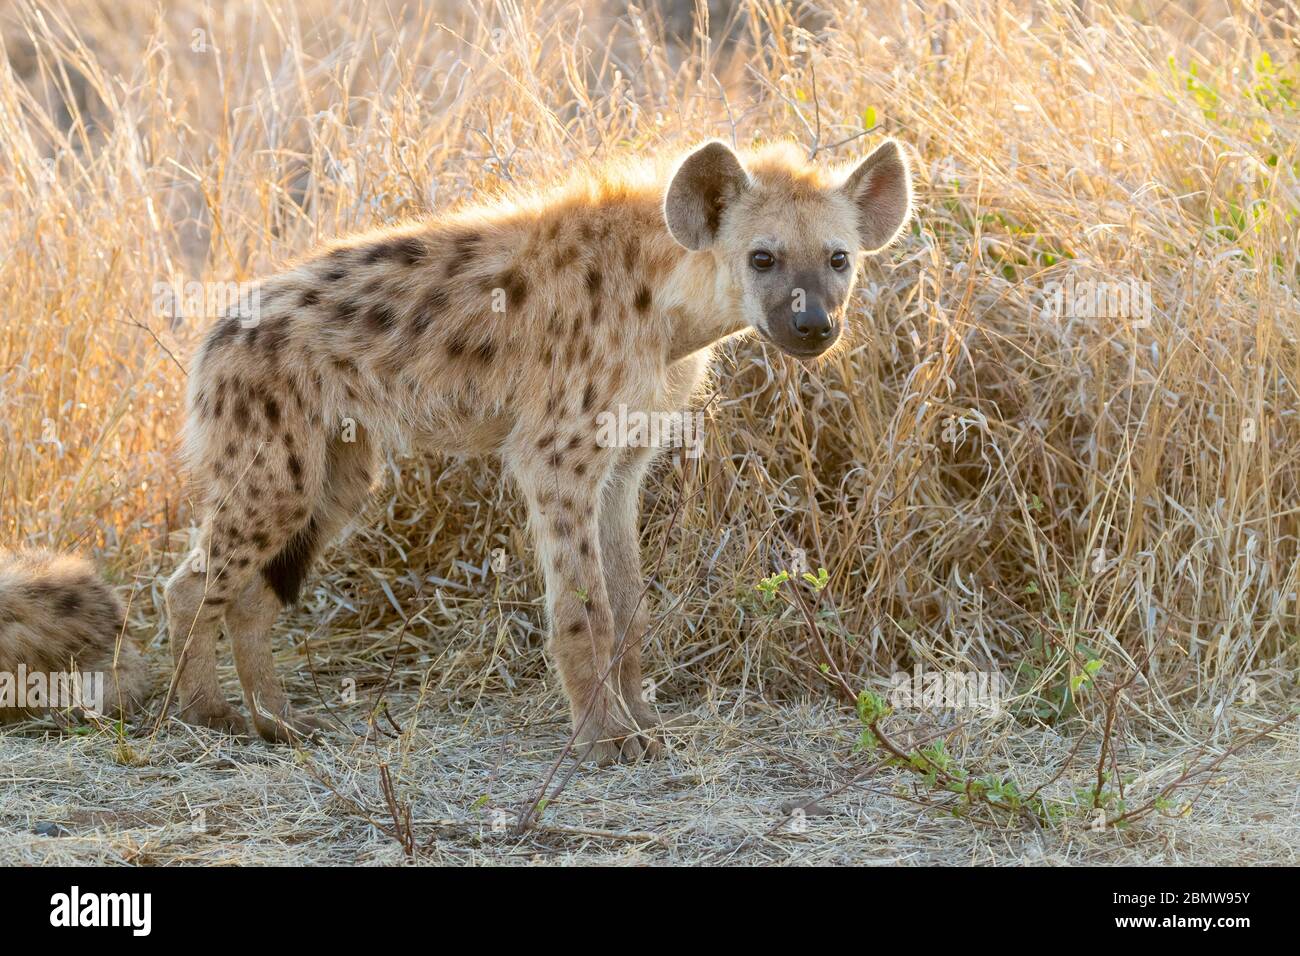 Spotted Hyena (Crocuta crocuta), a cub standing on the ground, Mpumalanga, South Africa Stock Photo